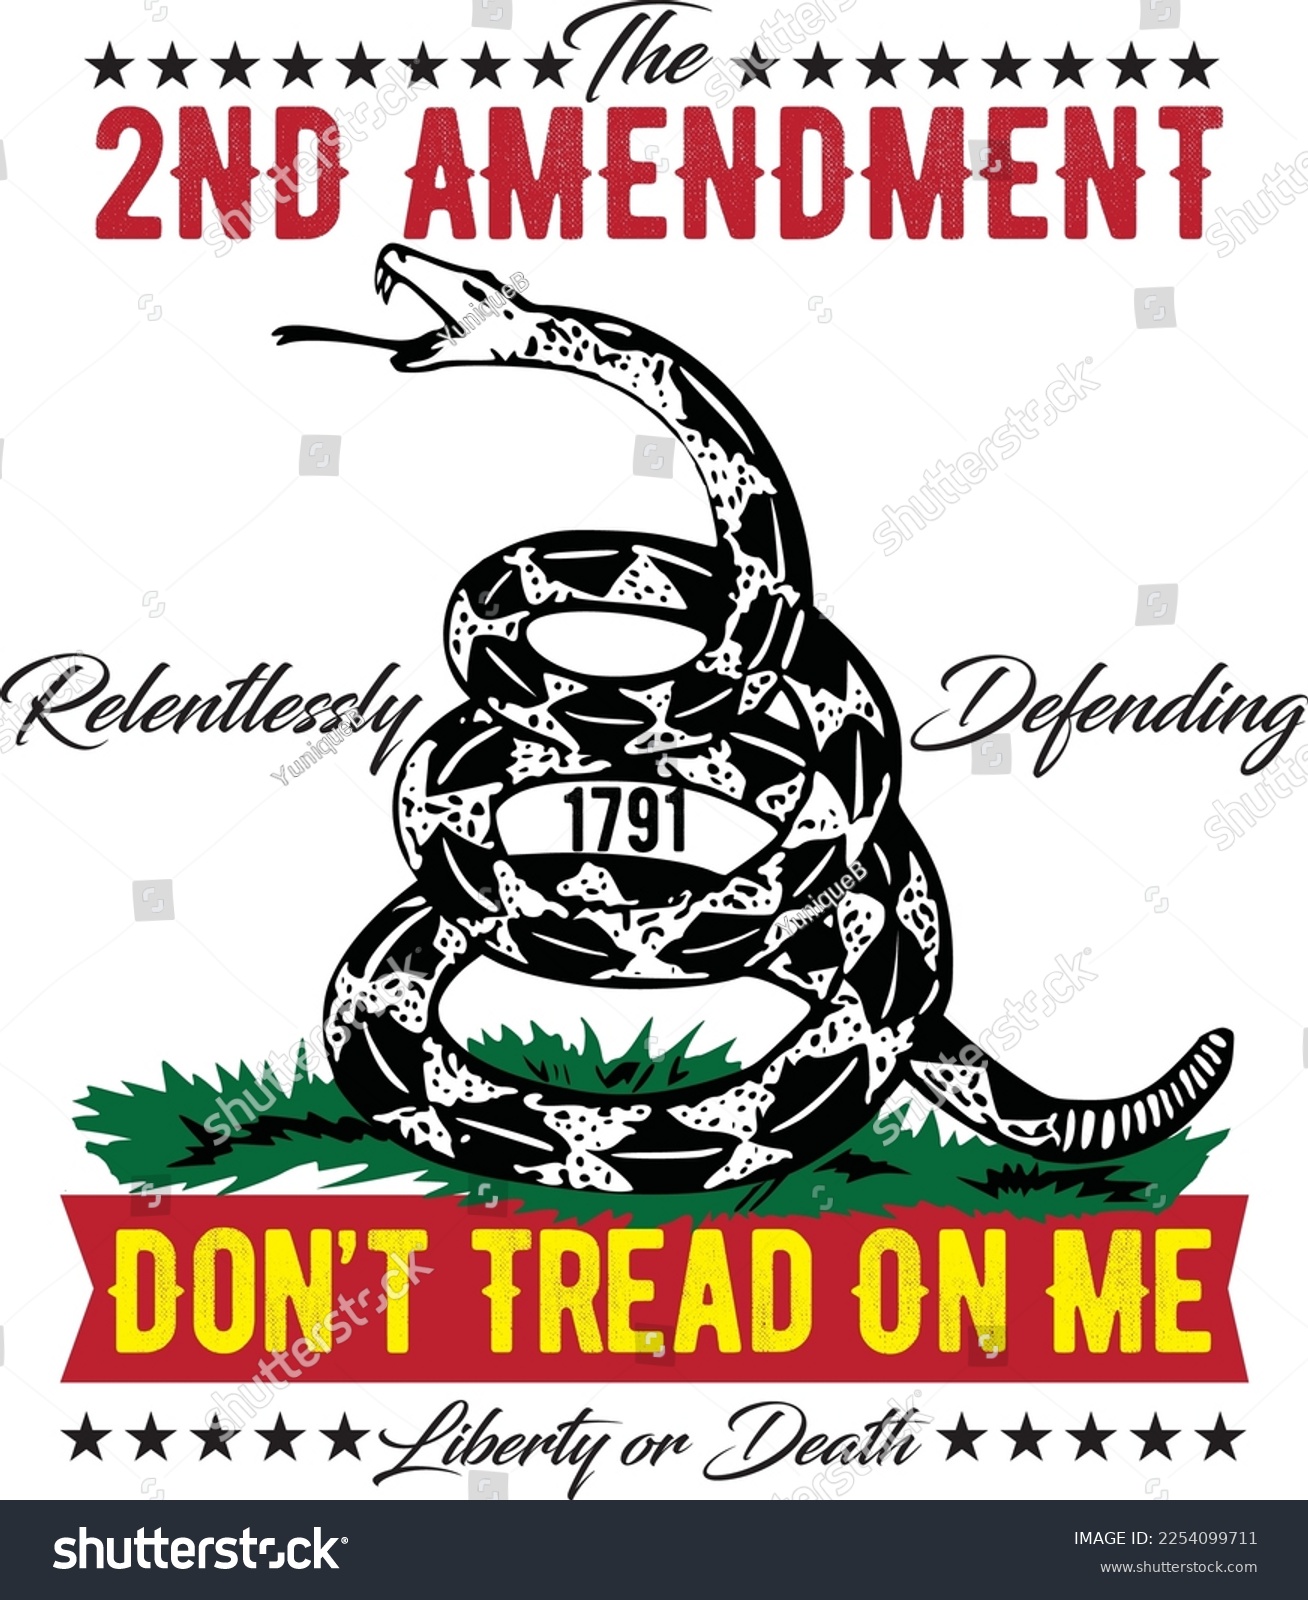 SVG of Don't thread on me 2nd Amendment T-shirt, print graphic. svg